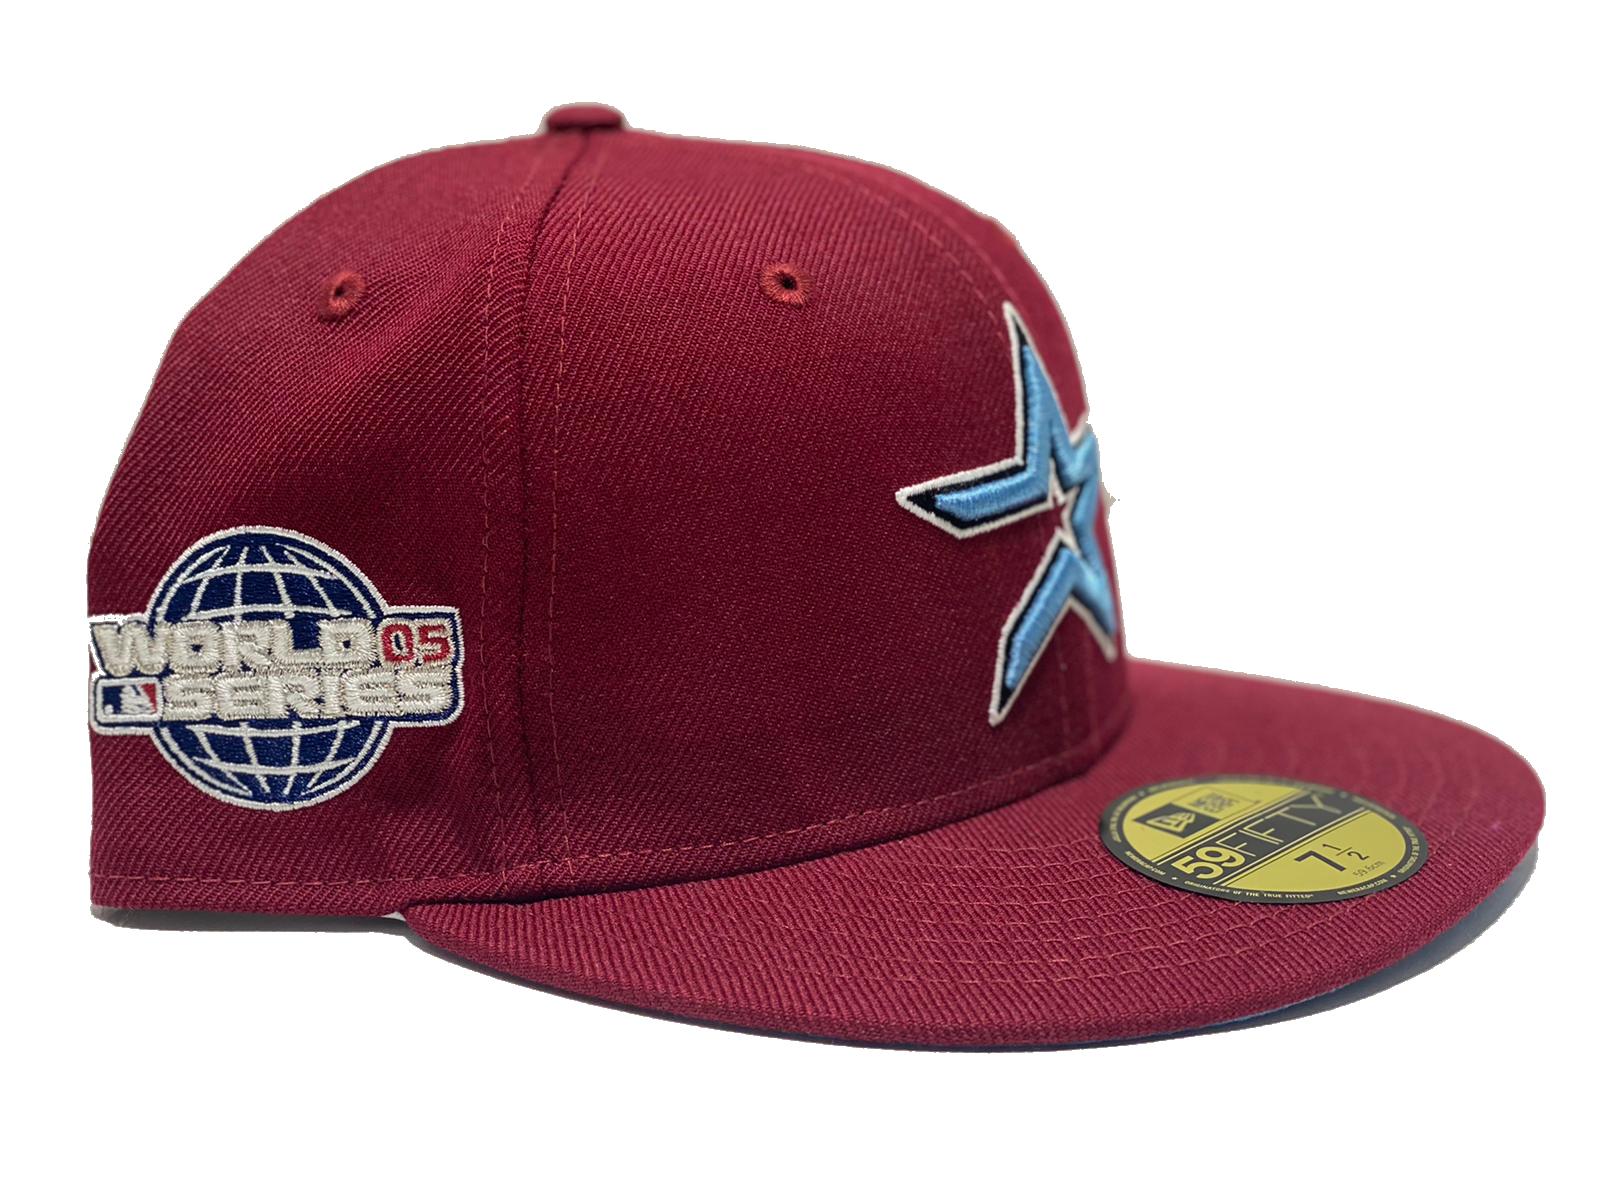 Sportsworld 165 Houston Astros Fitted Hat 2005 World India